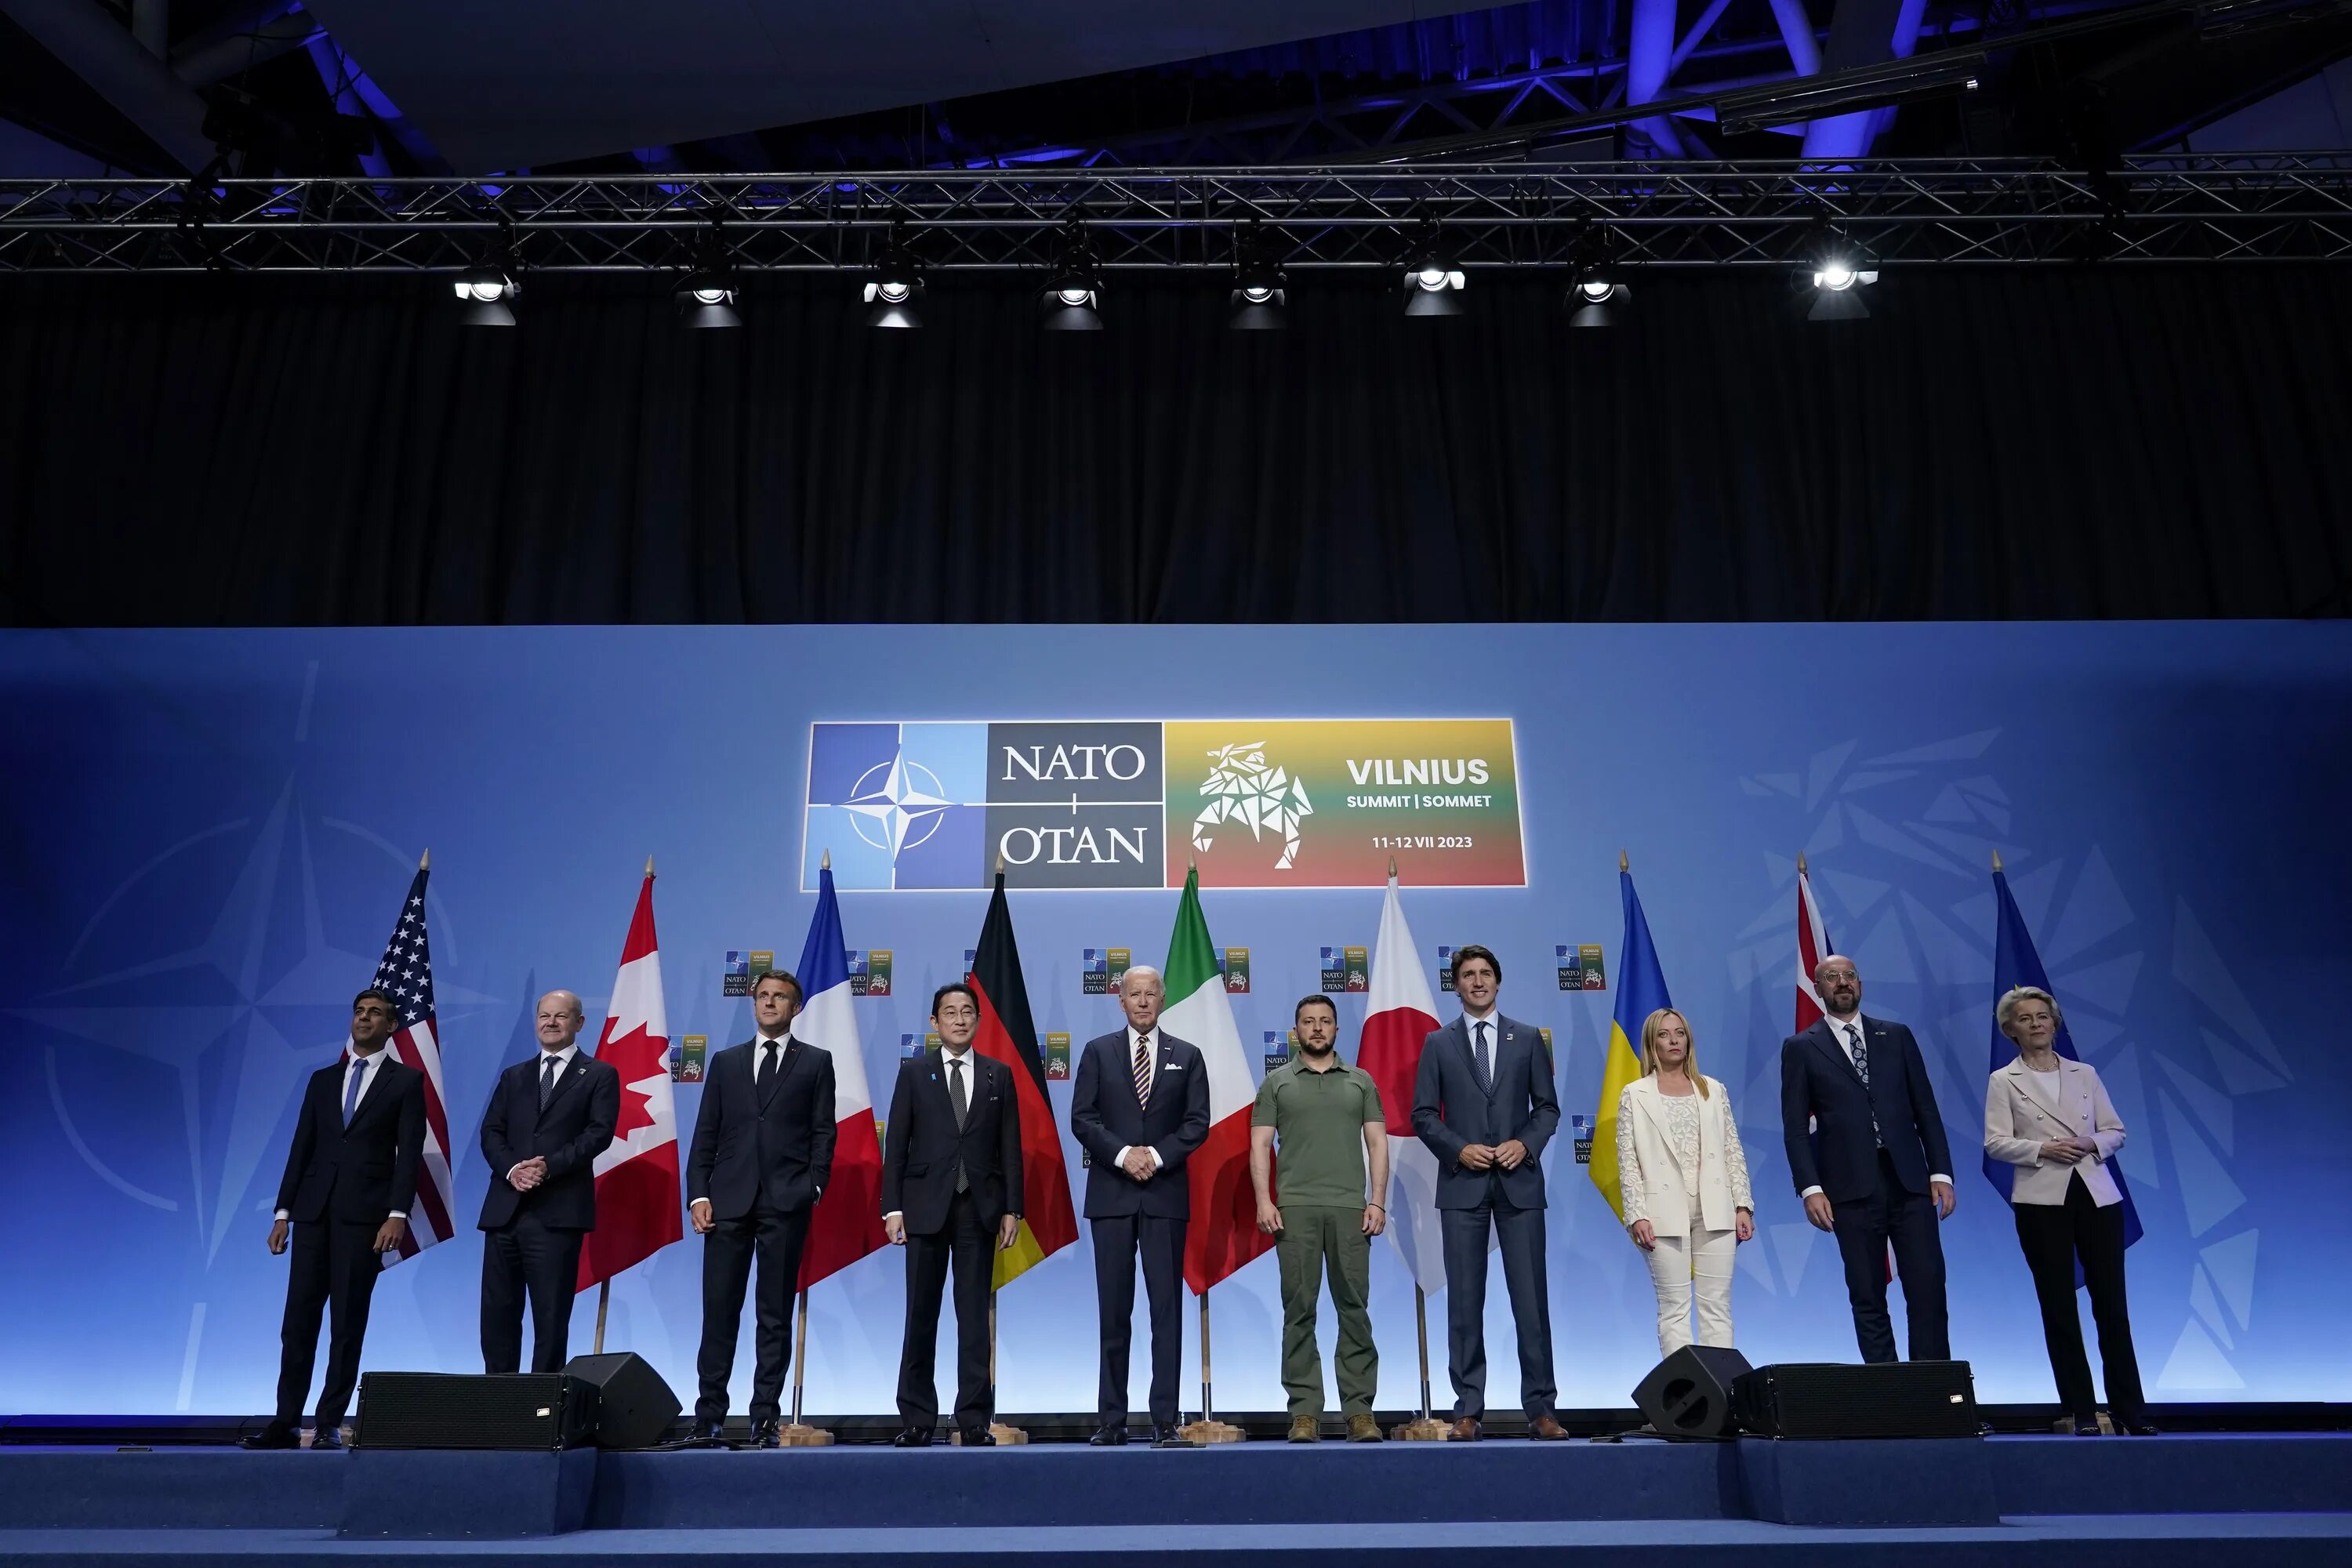 Новости россии и нато сегодня. Фото участников саммита НАТО 2023. Пражский саммит НАТО 2002. Саммит НАТО В Вильнюсе 2023.